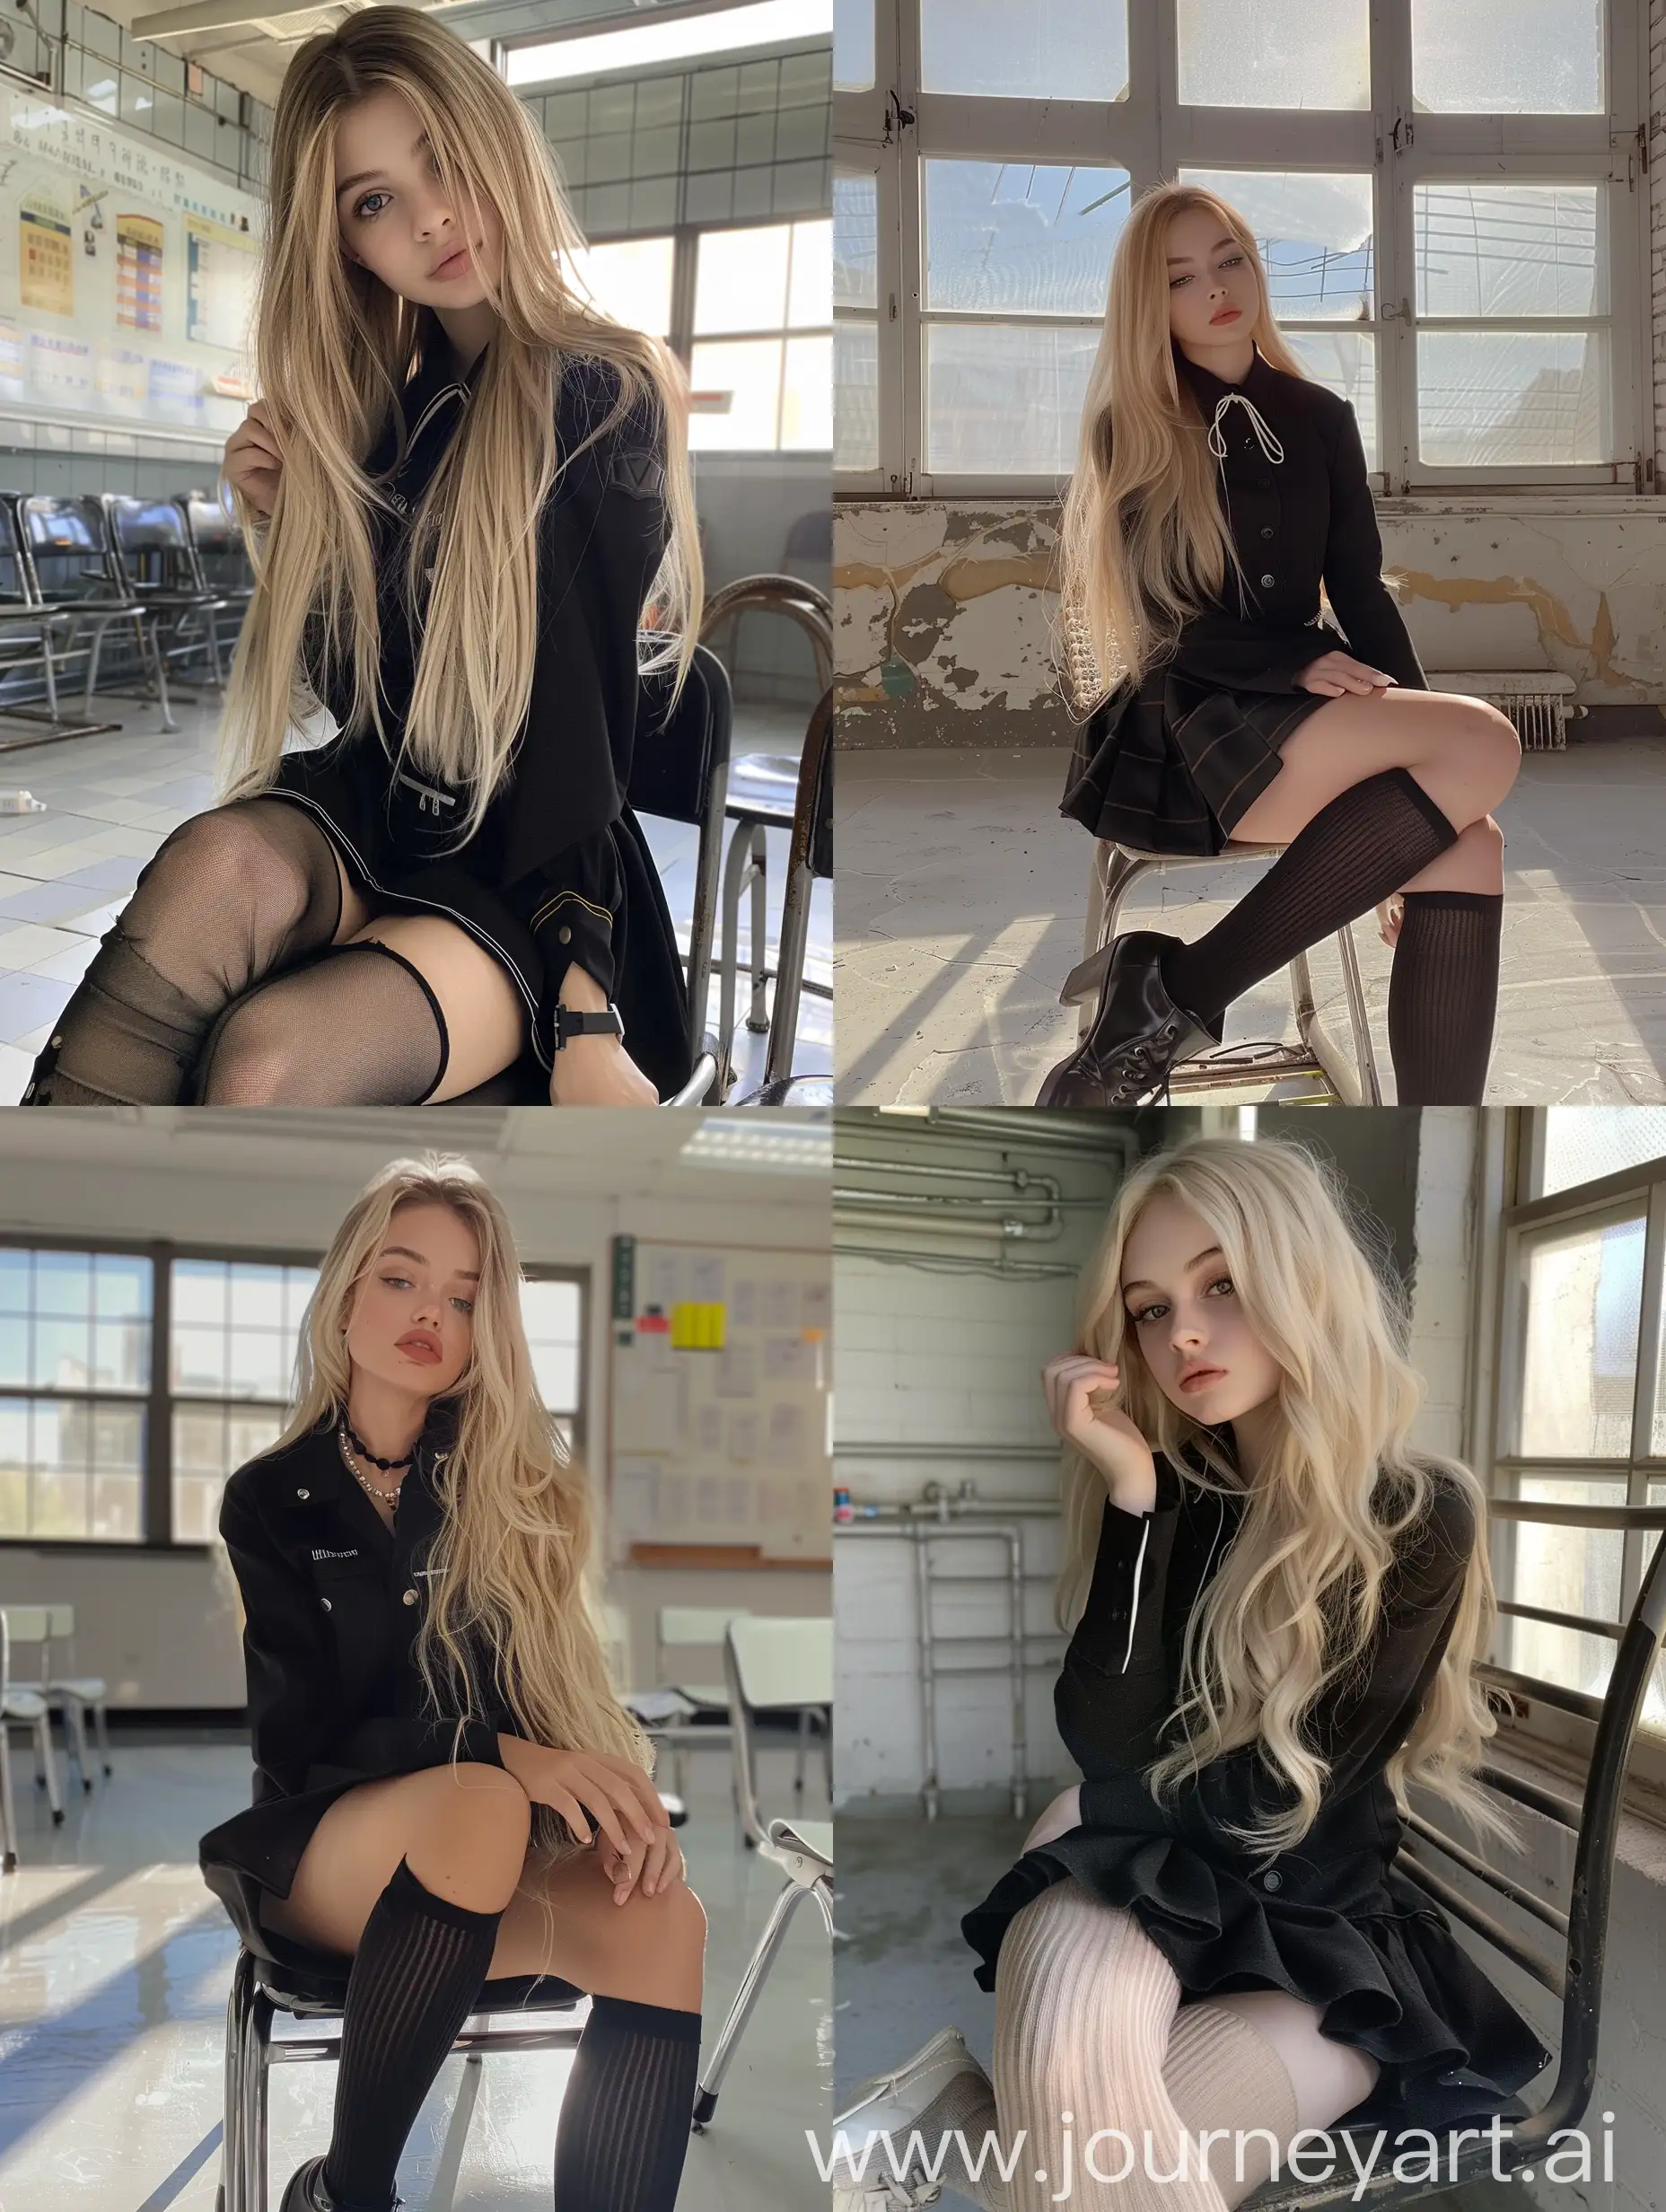 Blonde-Influencer-Schoolgirl-in-Black-Uniform-Taking-Natural-Selfie